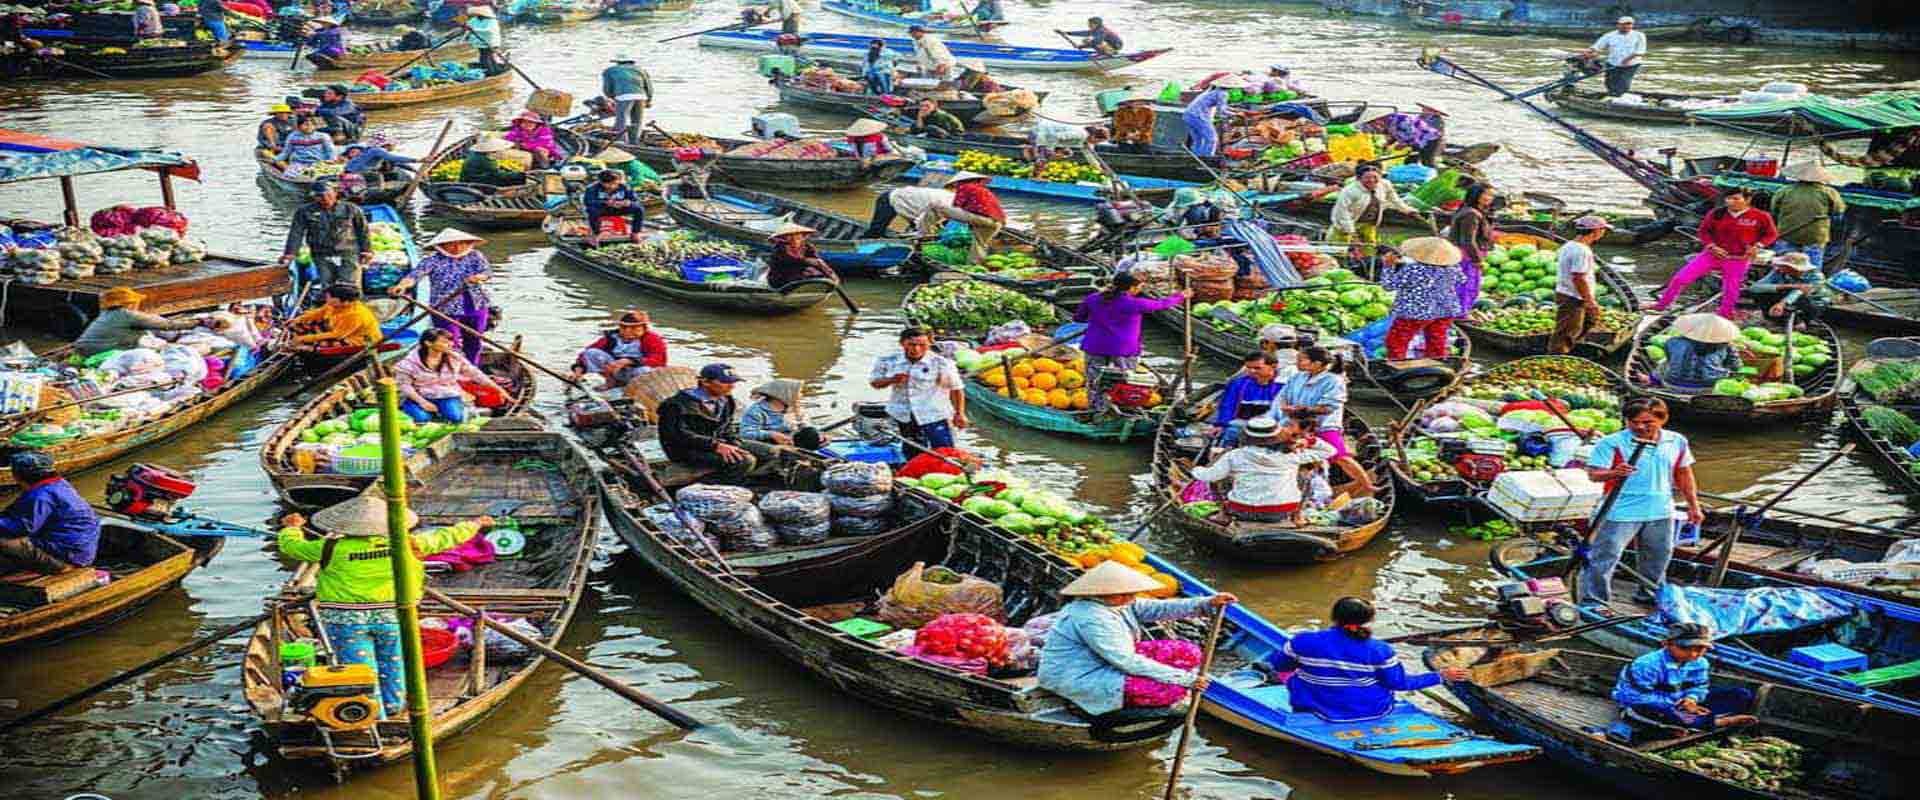 Cai-Rang-Can-Tho-floating-market.jpg